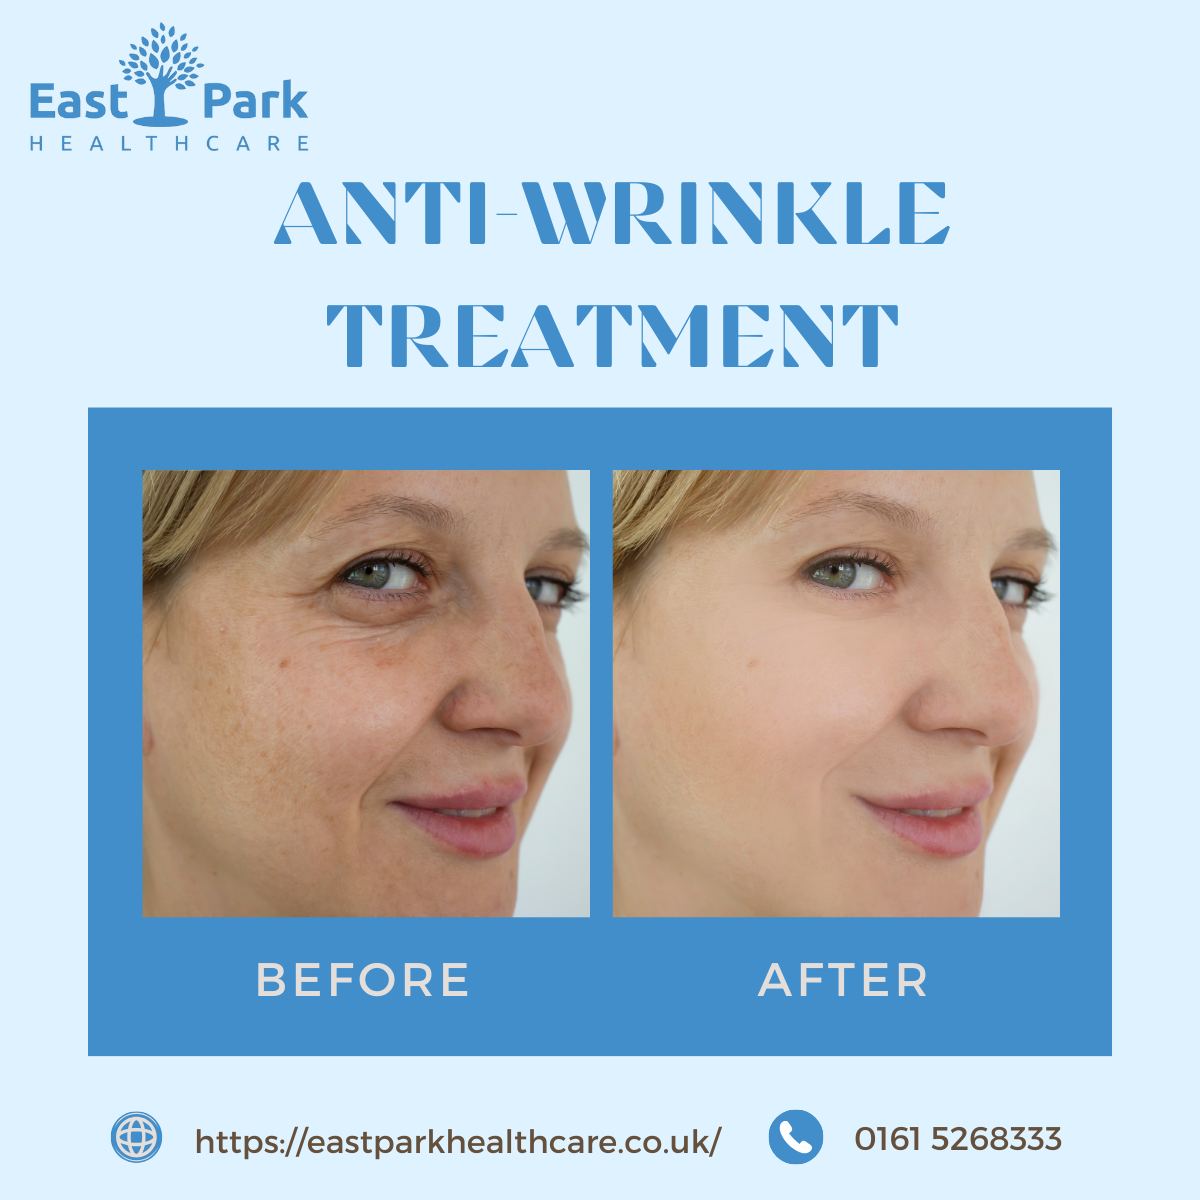 Wrinkle treatment clinic anti wrinkle treatment anti wrinkle treatments WRINKLE TREATMENTs